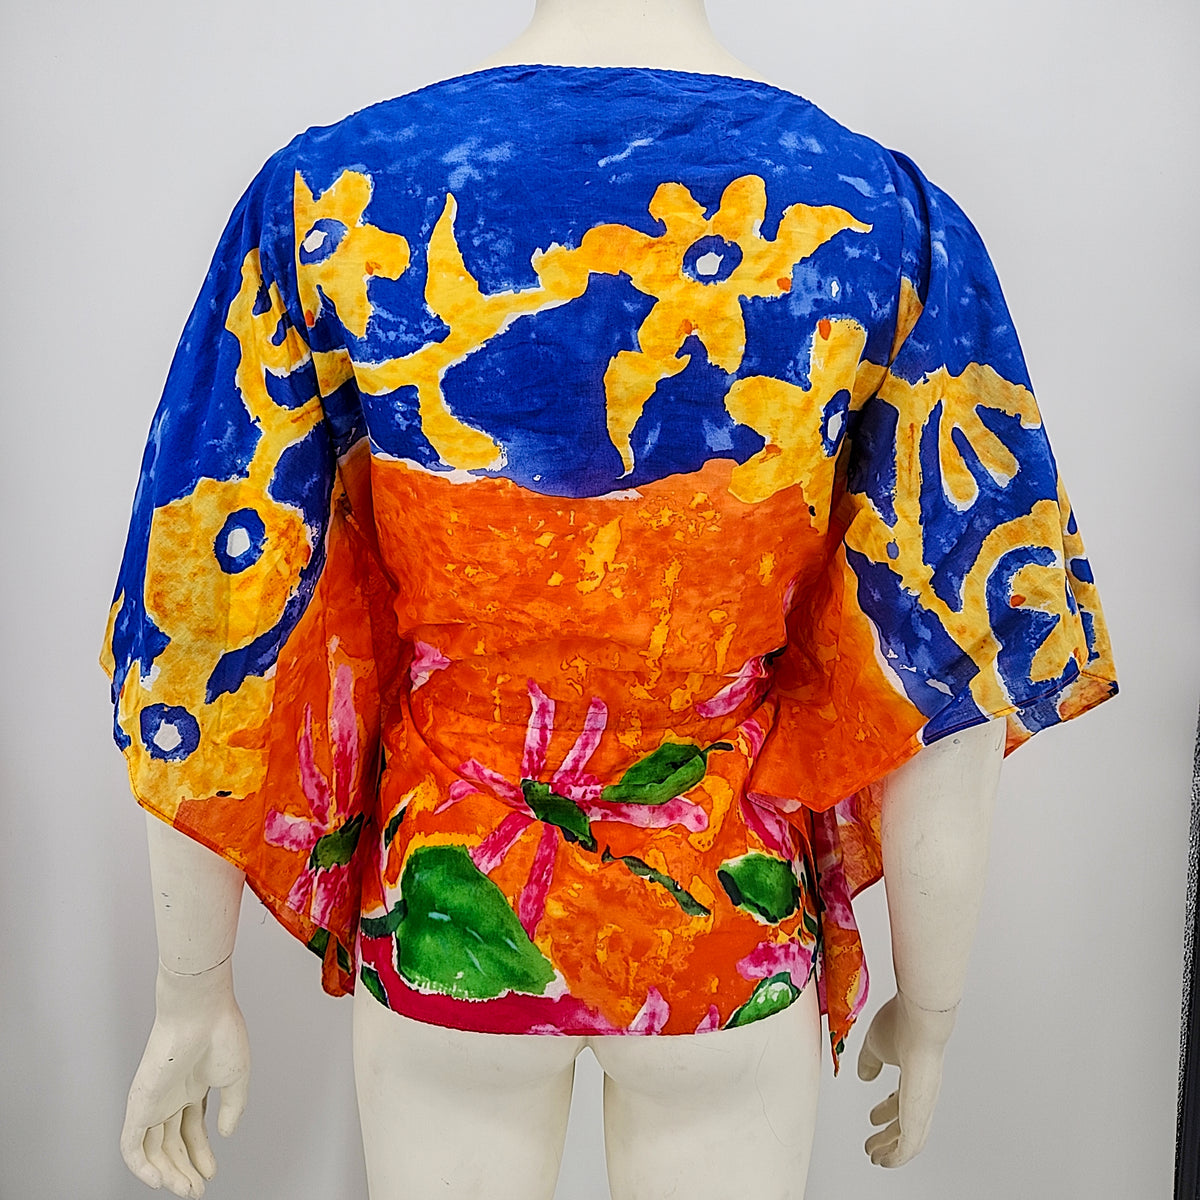 Alfani Plus Size Sheer Printed Kimono Jacket, Created For Macy's